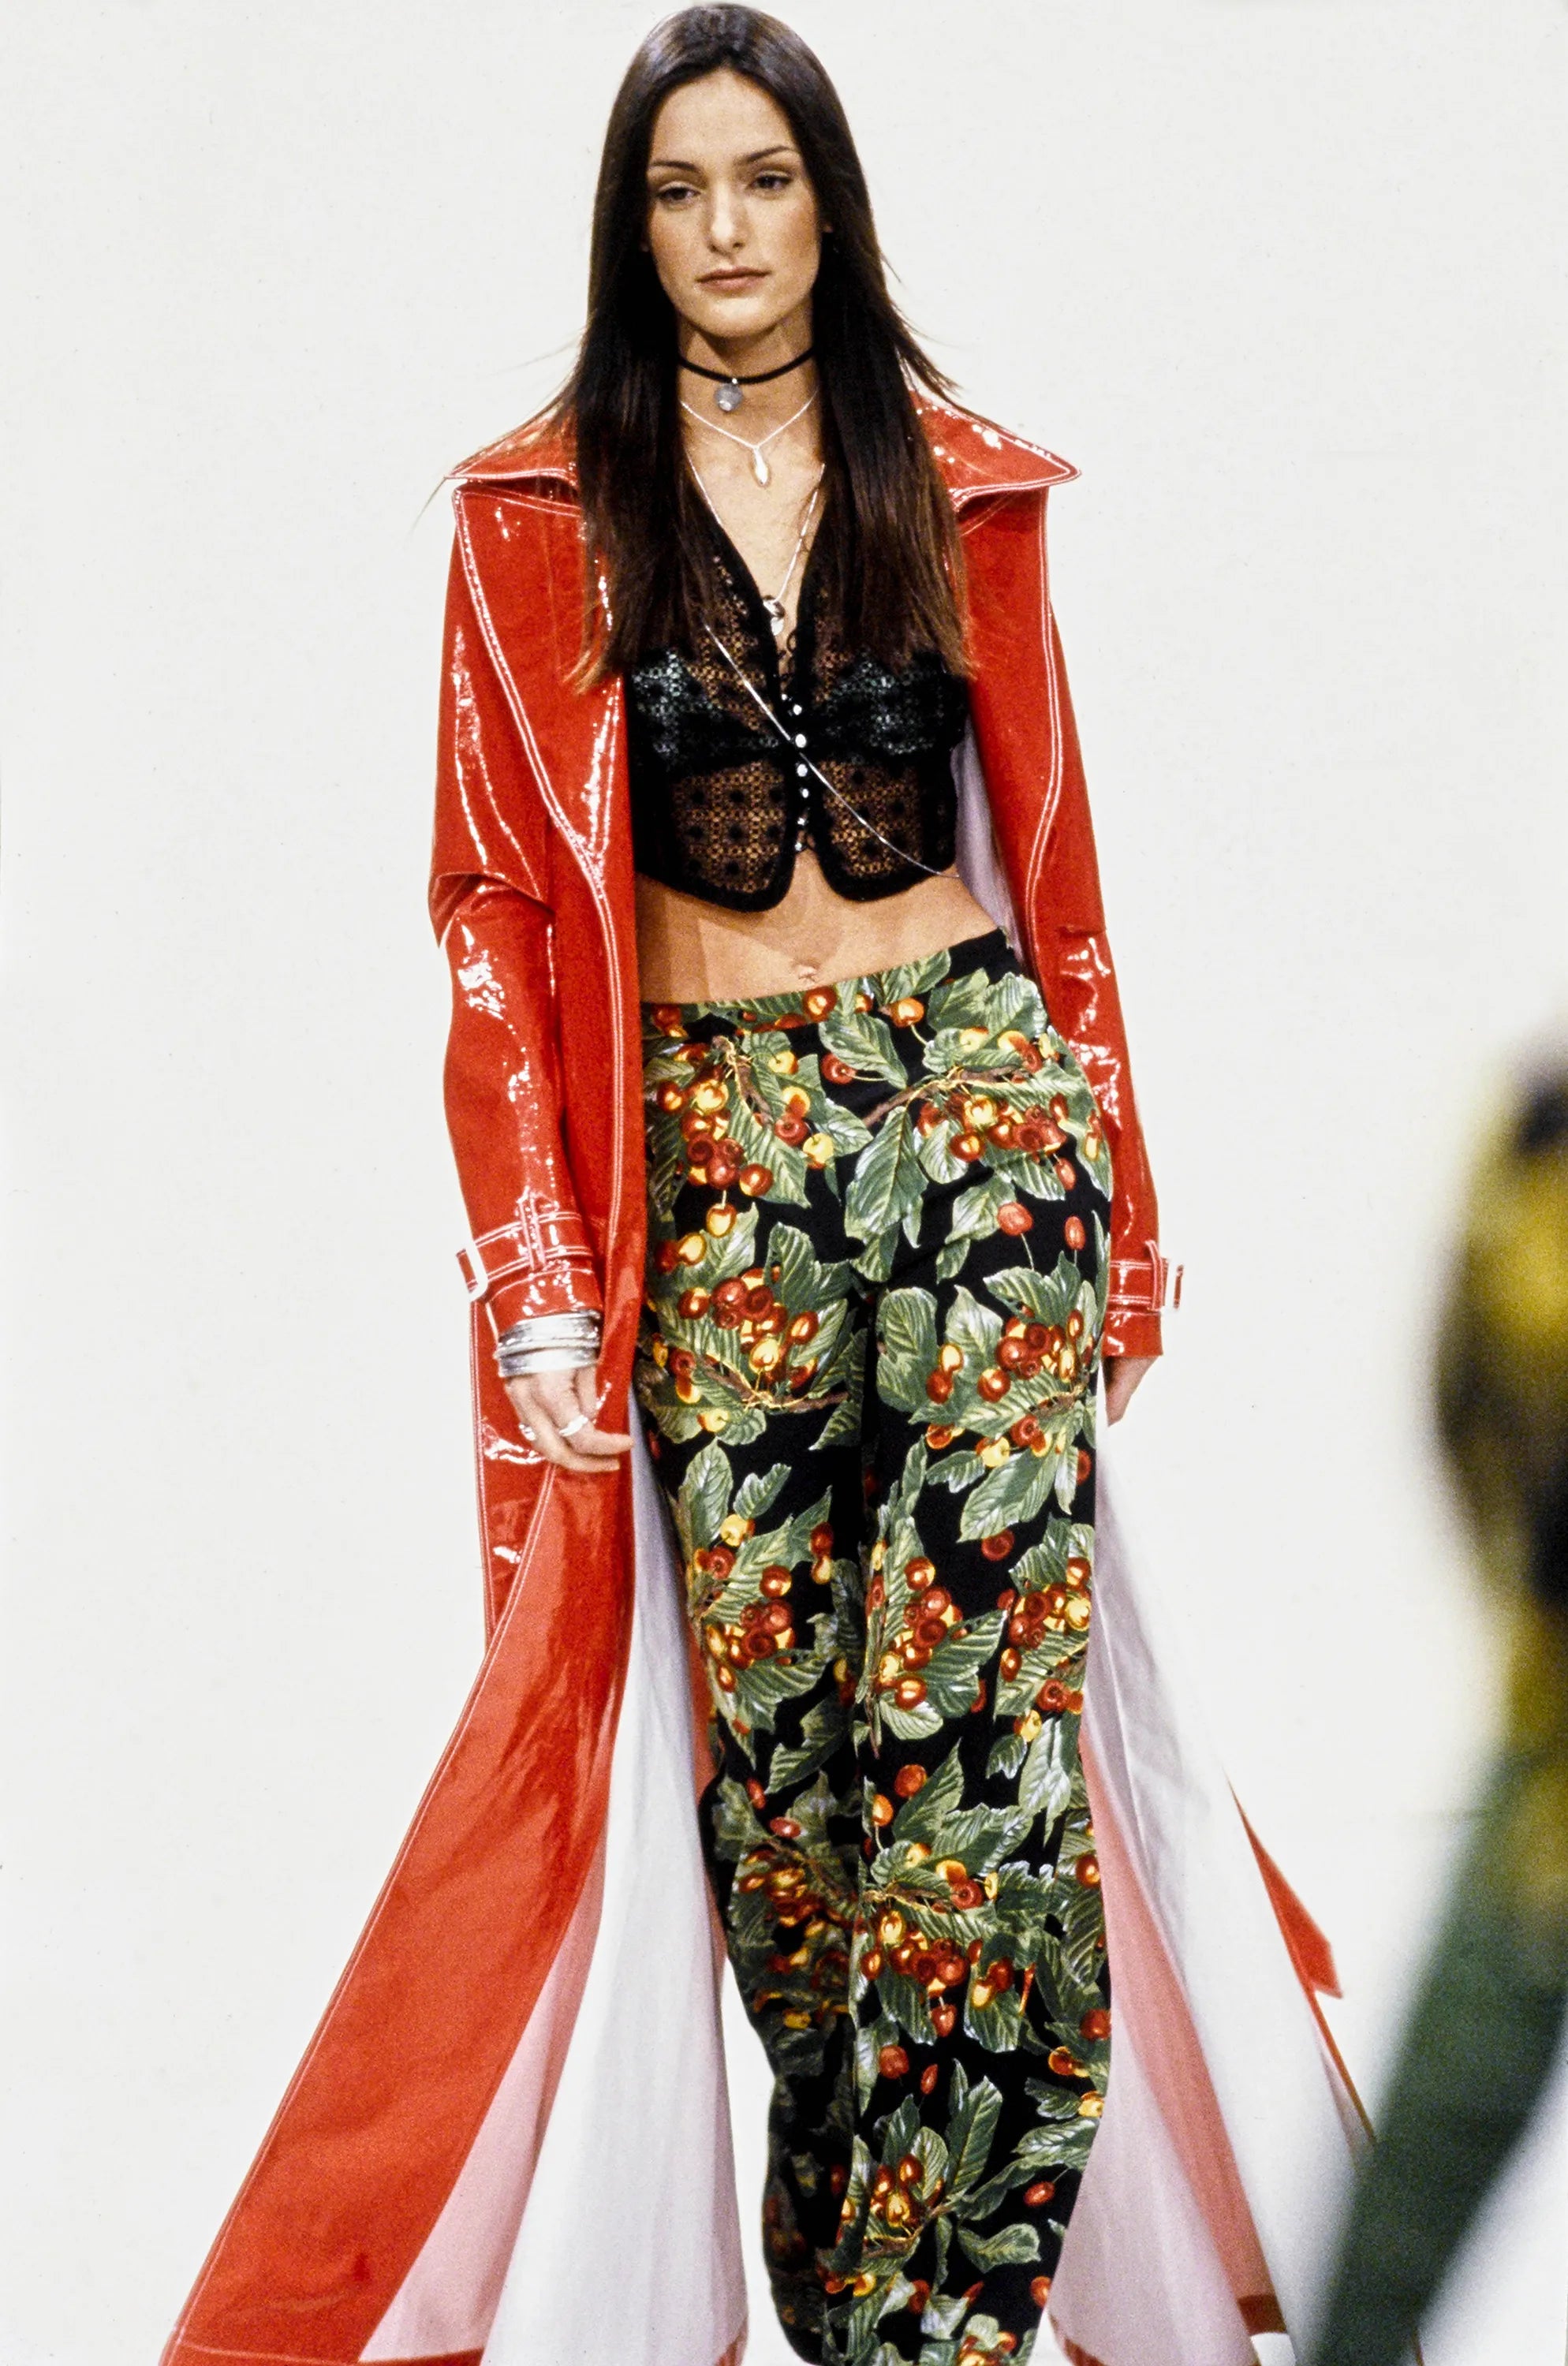 Vintage Marc Jacobs for Perry Ellis 1993 S/S Grunge Cherry Vest on runway model @ Recess LA